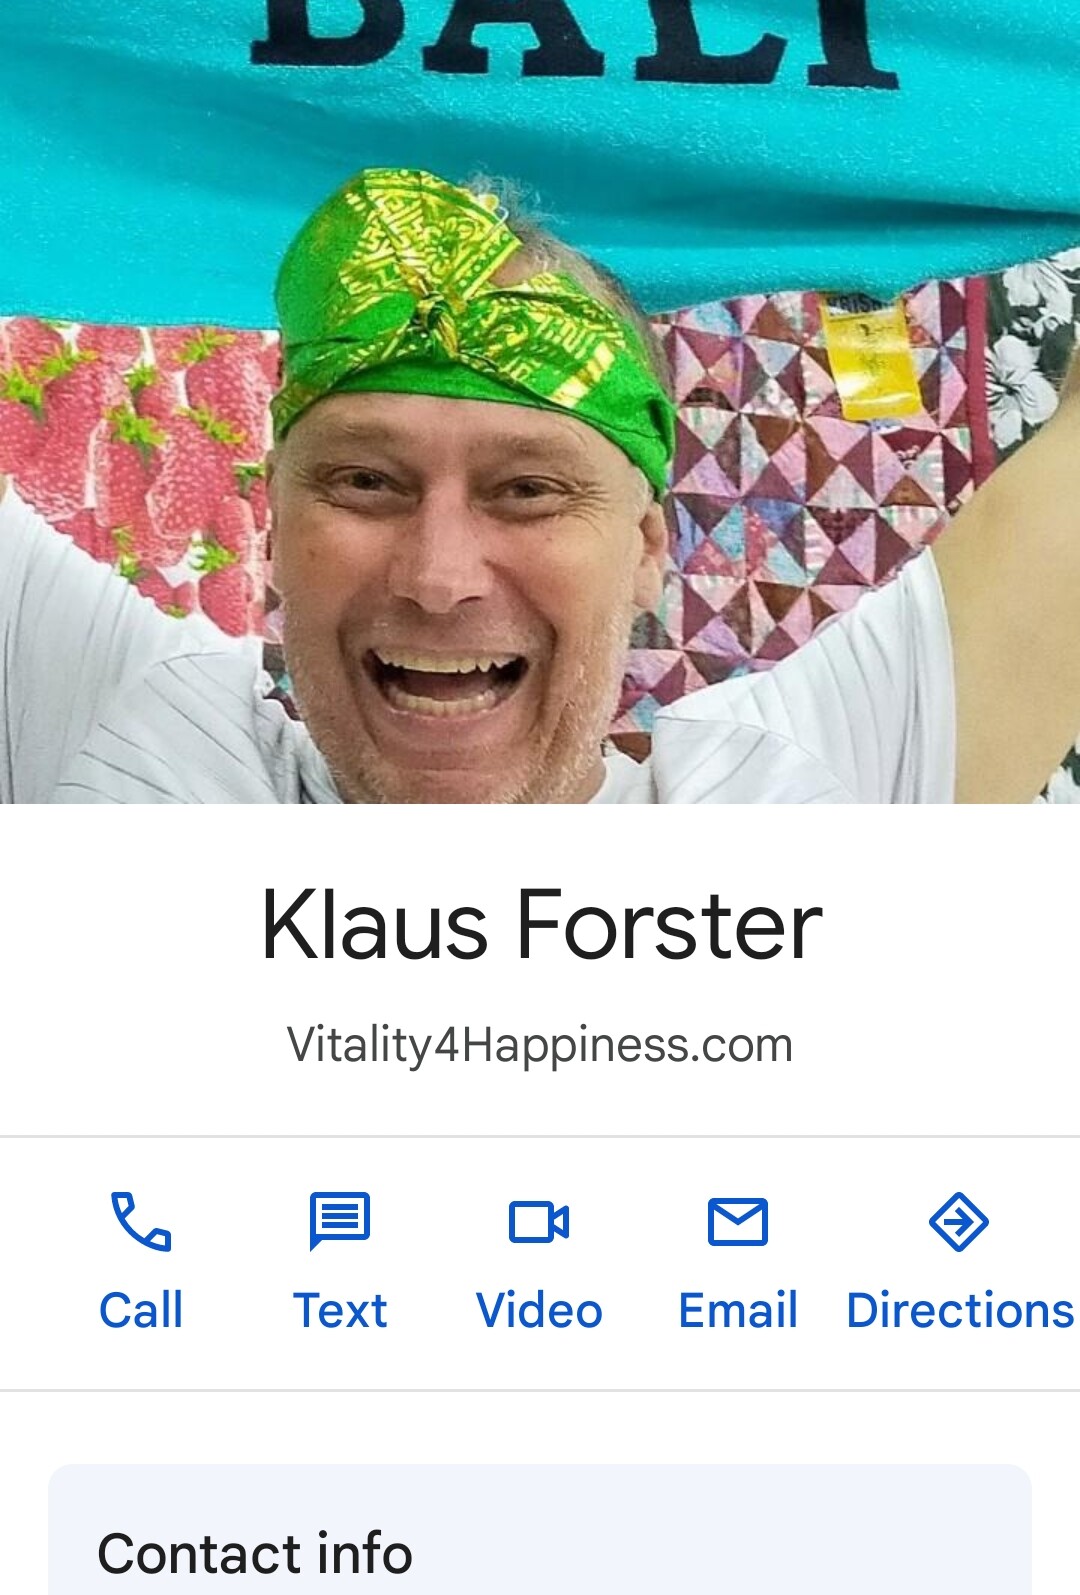 Descargar Vcard Klaus Forster Vitality4Happiness